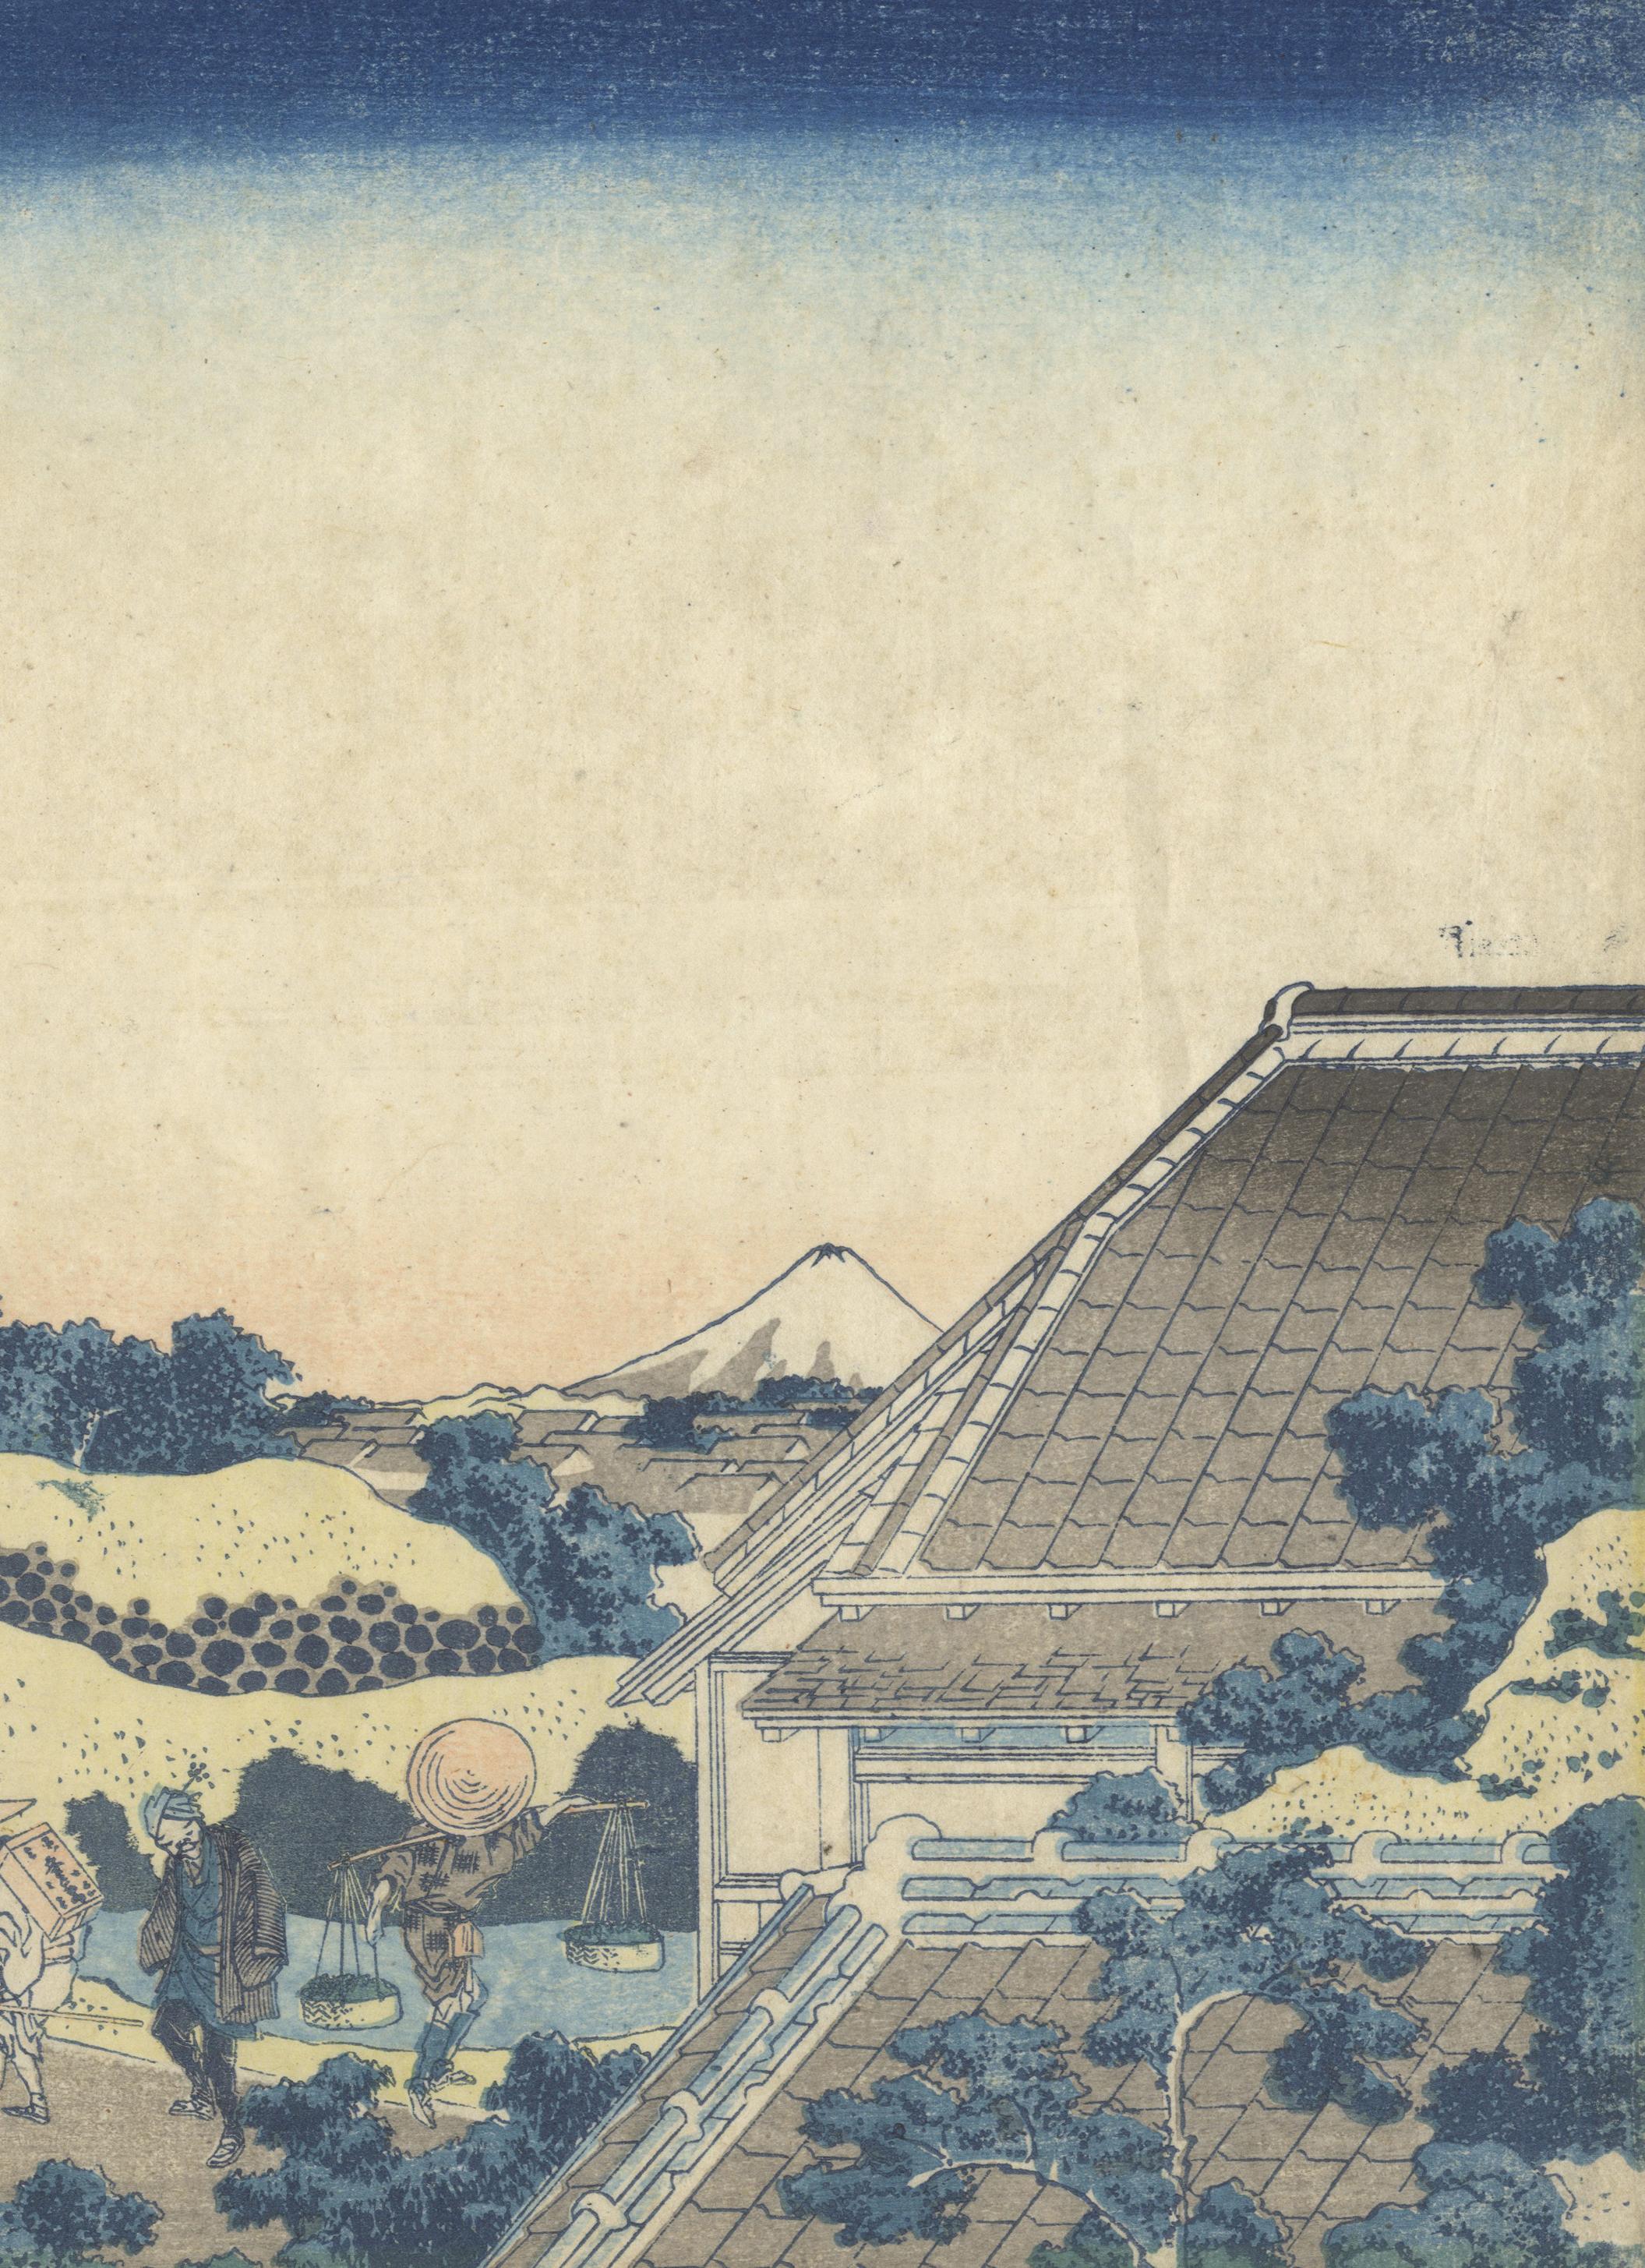 Edo Hokusai 19th Century Japanese Woodblock Print, Ukiyo-e 36 Views of Mount Fuji For Sale